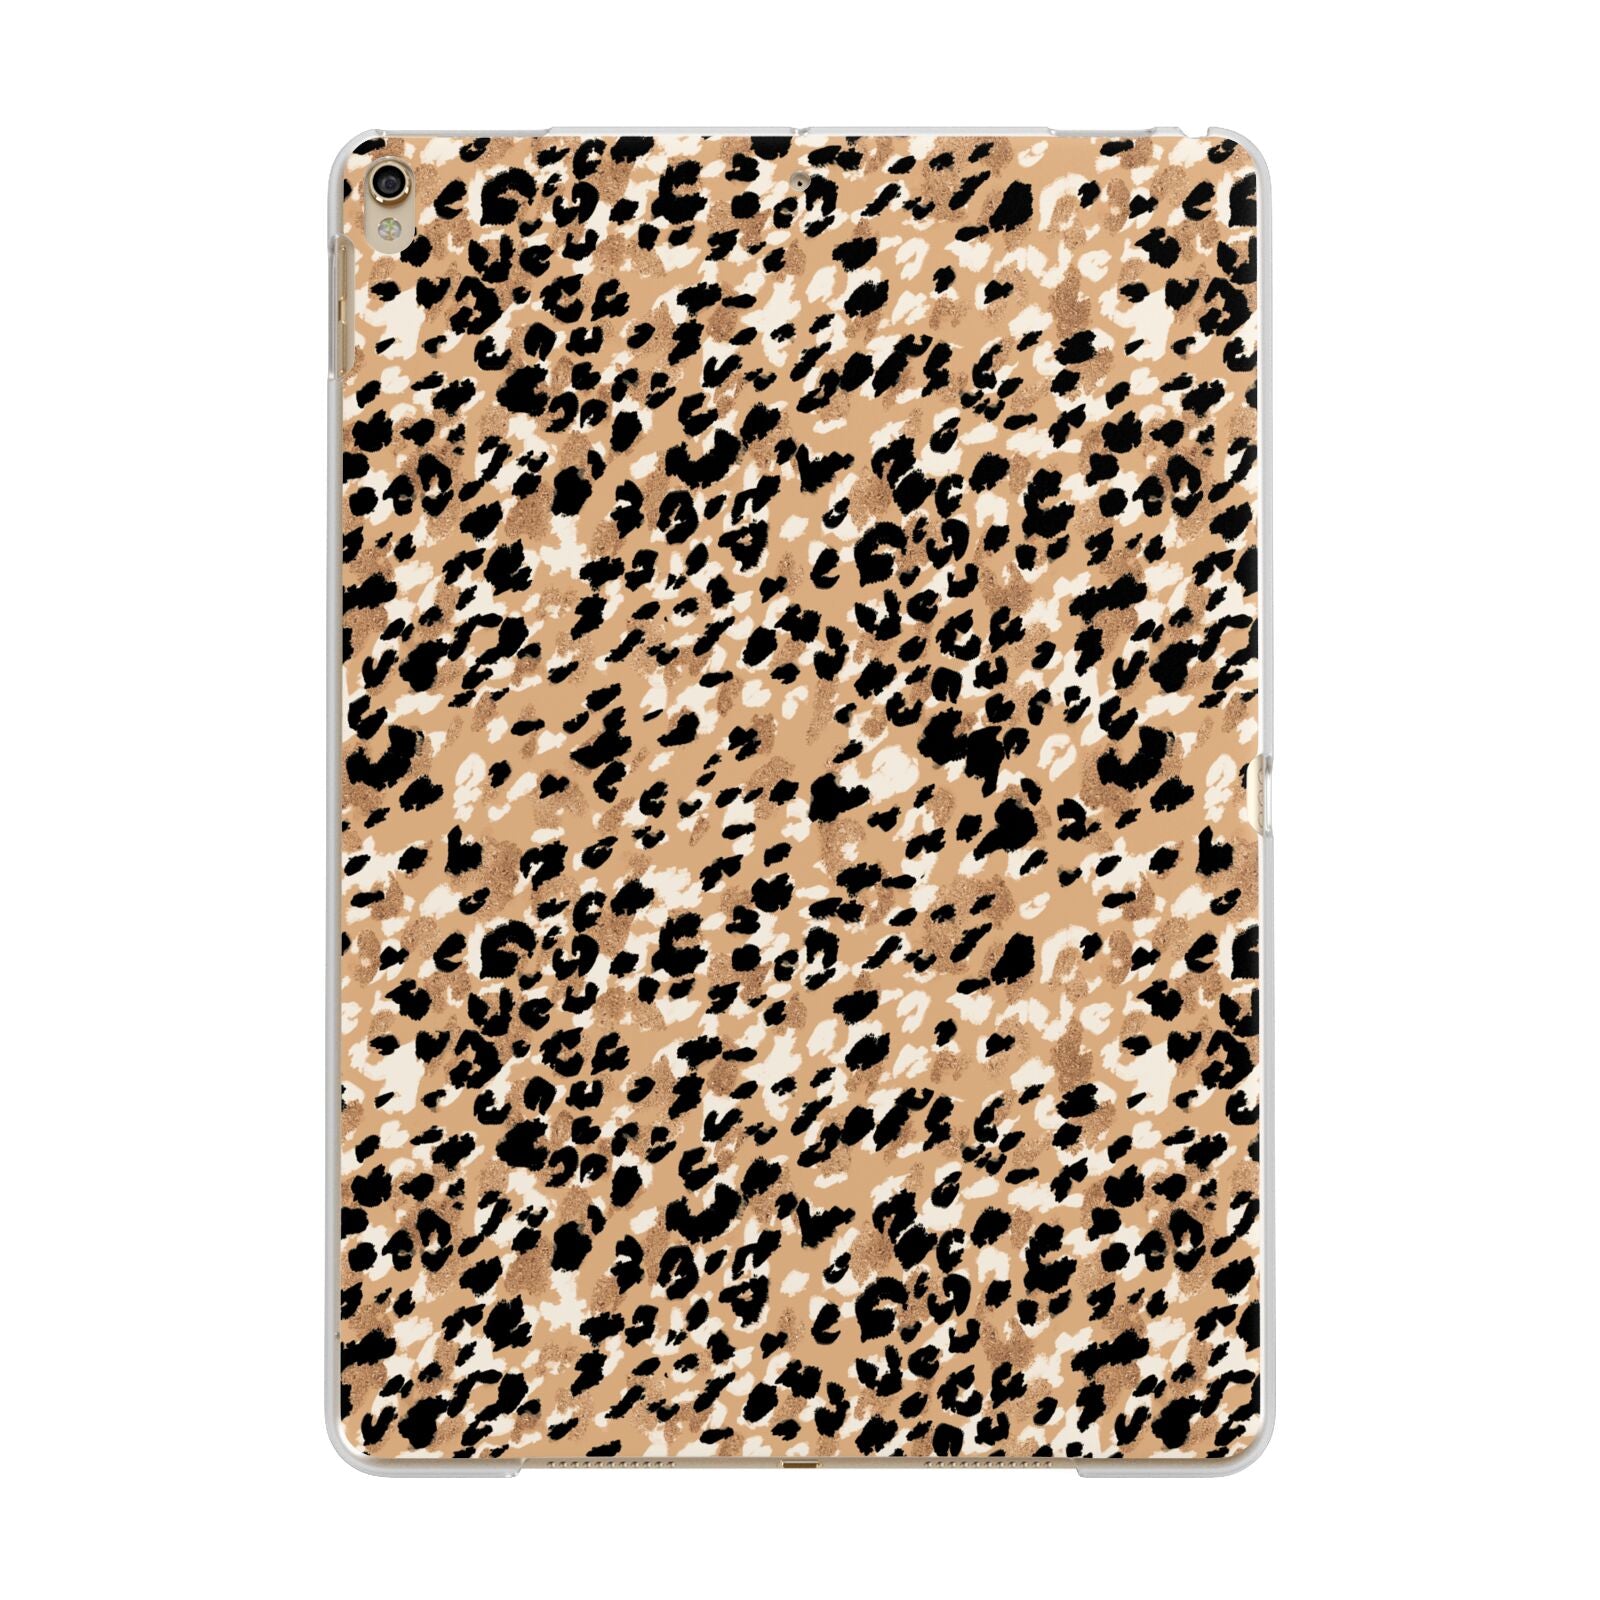 Leopard Print Apple iPad Gold Case